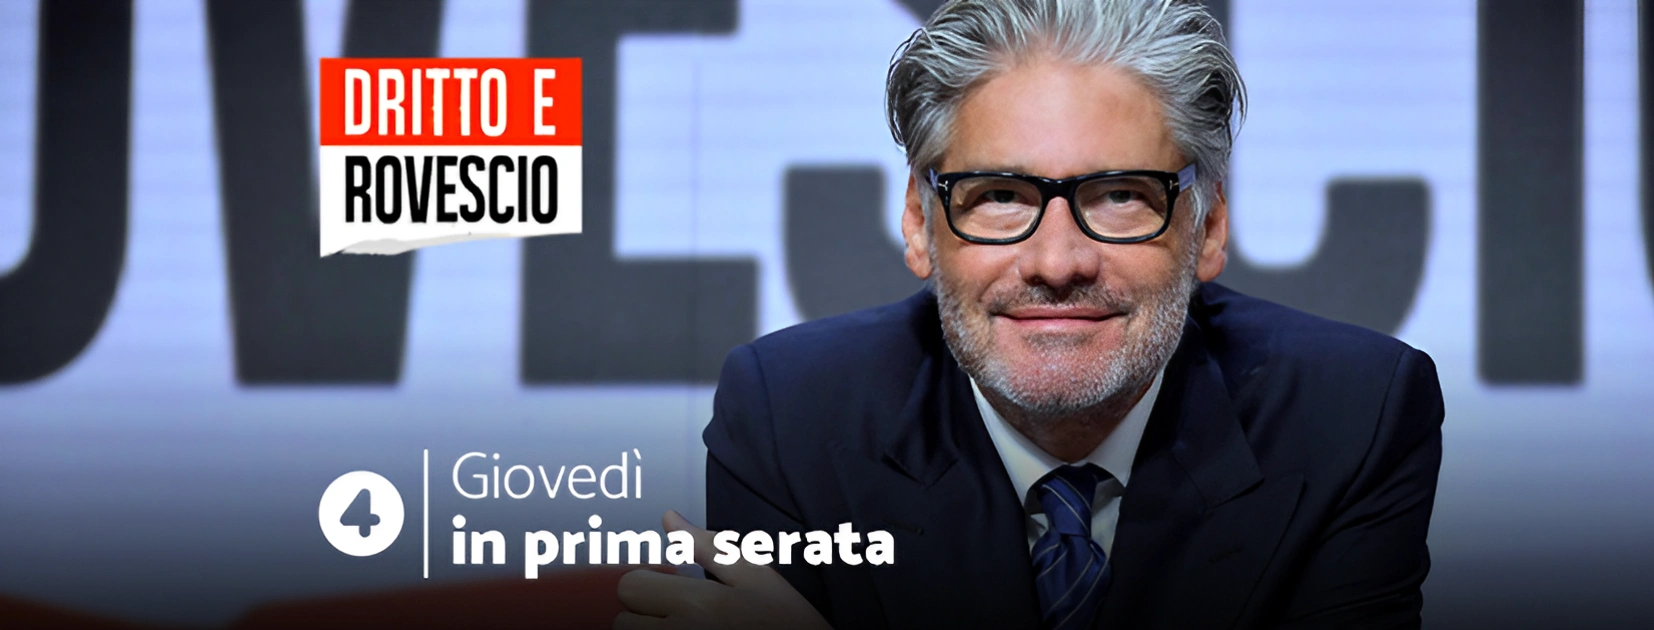 Cover von Dritto e Rovescio, der Show, die von Paolo Del Debbio moderiert wird